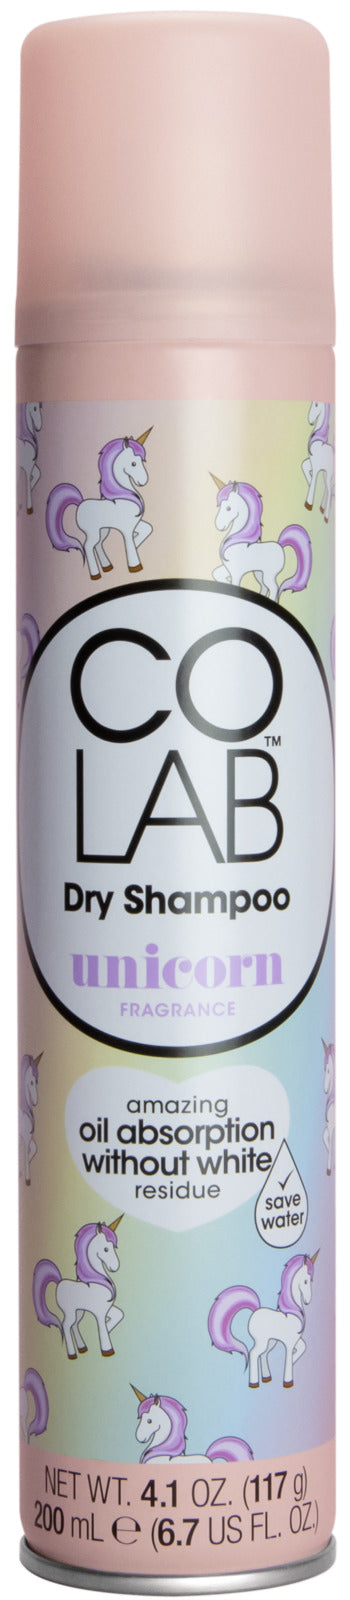 Co Lab: Dry Shampoo - Unicorn (200ml)